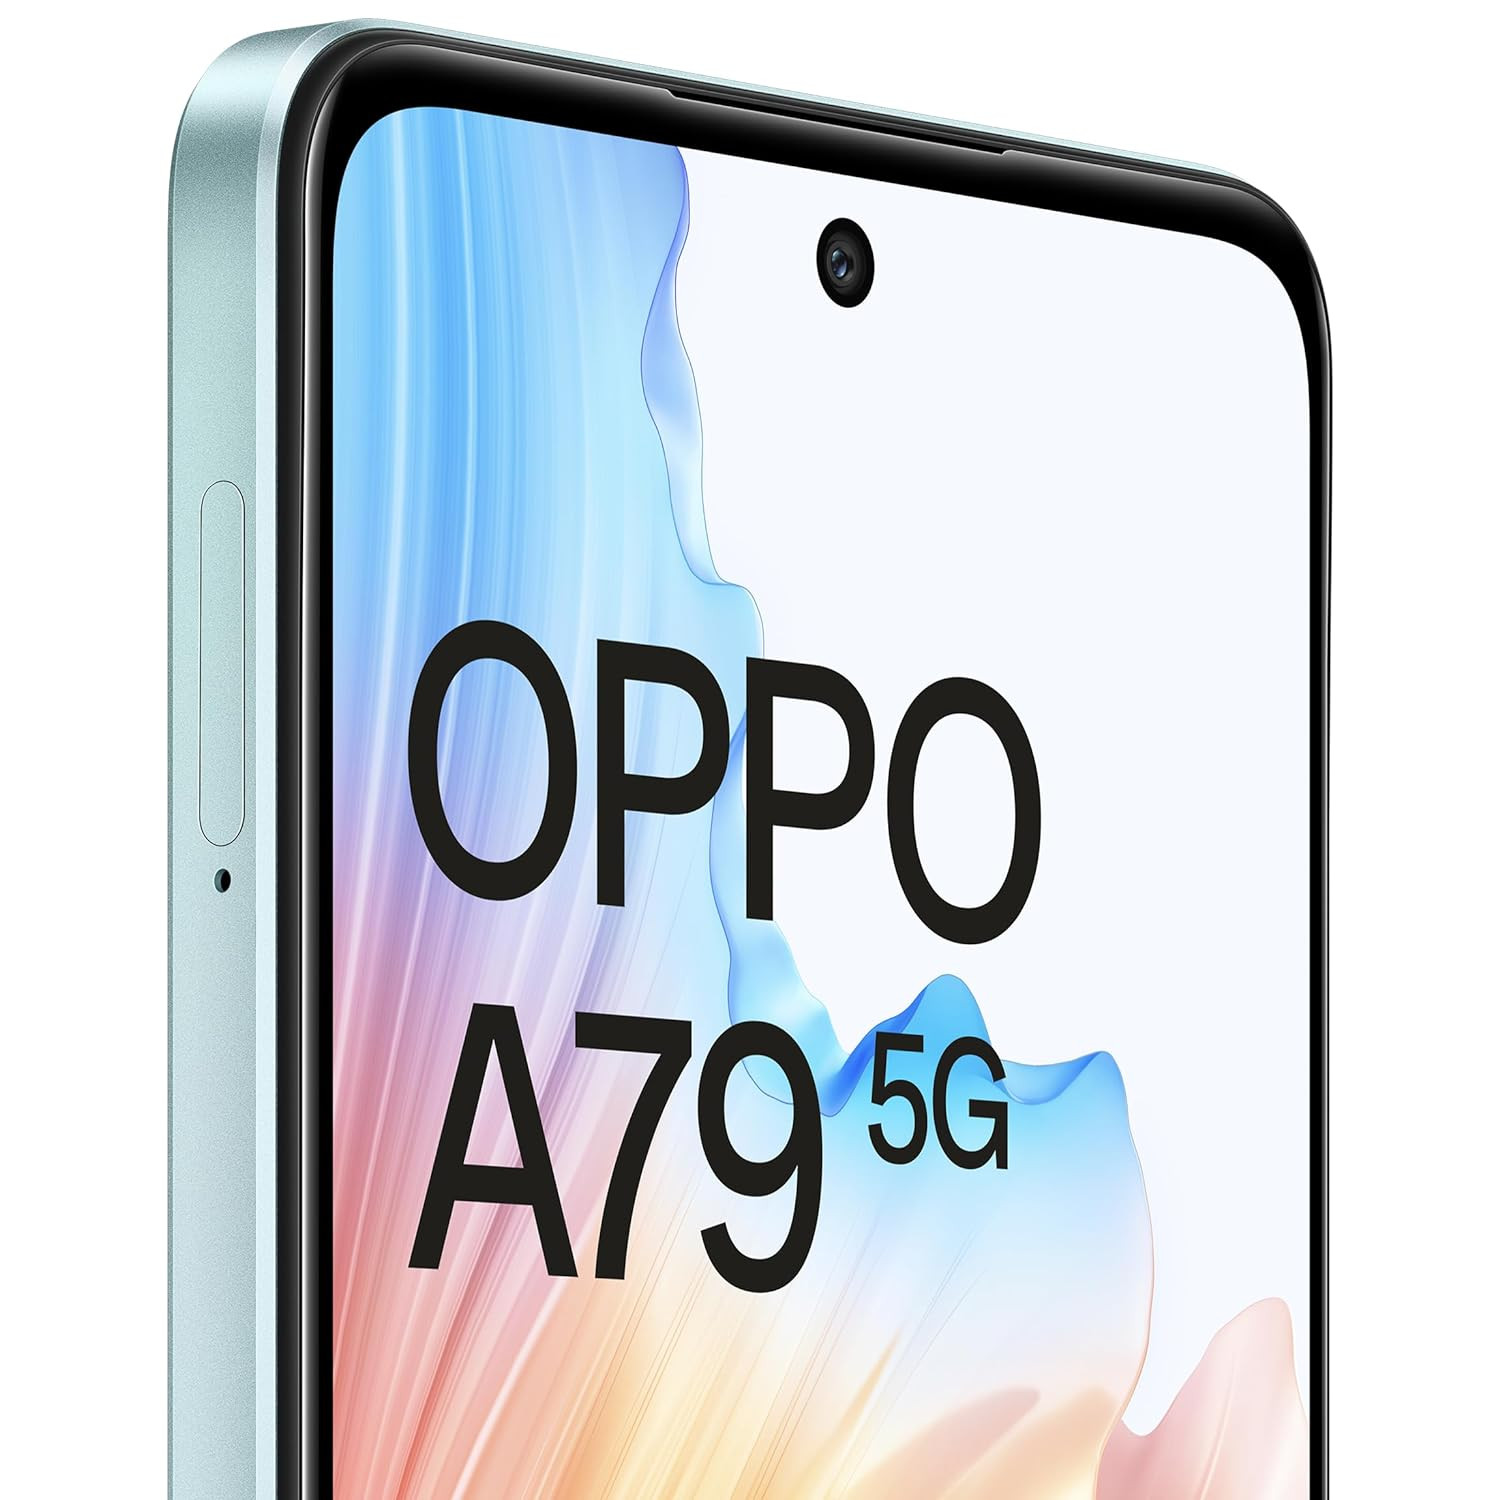 OPPO A79 5G (Glowing Green, 128 GB) (8 GB RAM)